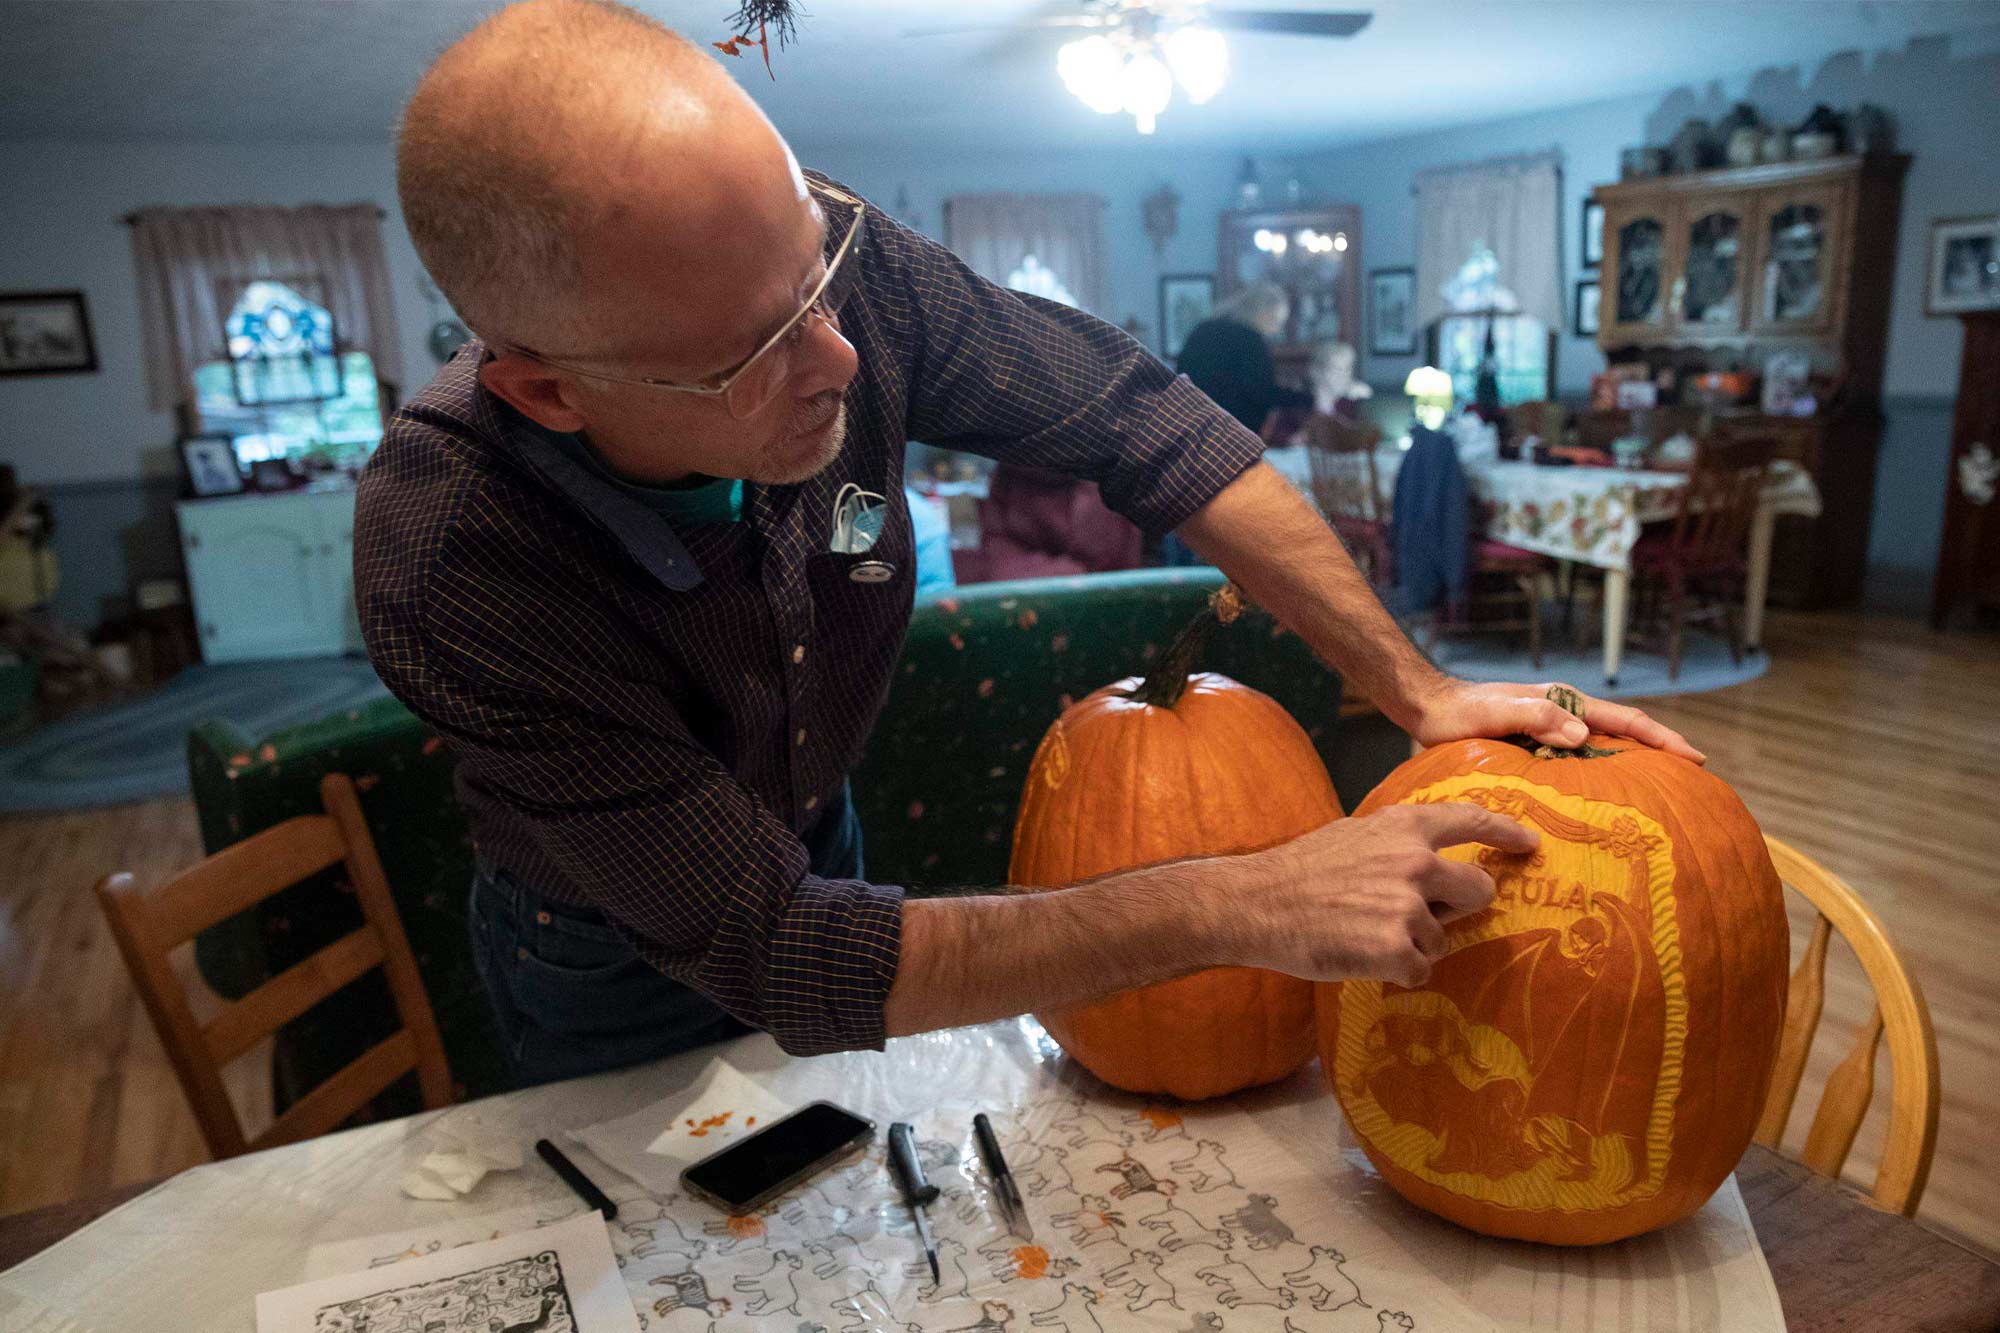 Ed Morton Caring a pumpkin in his kitchen